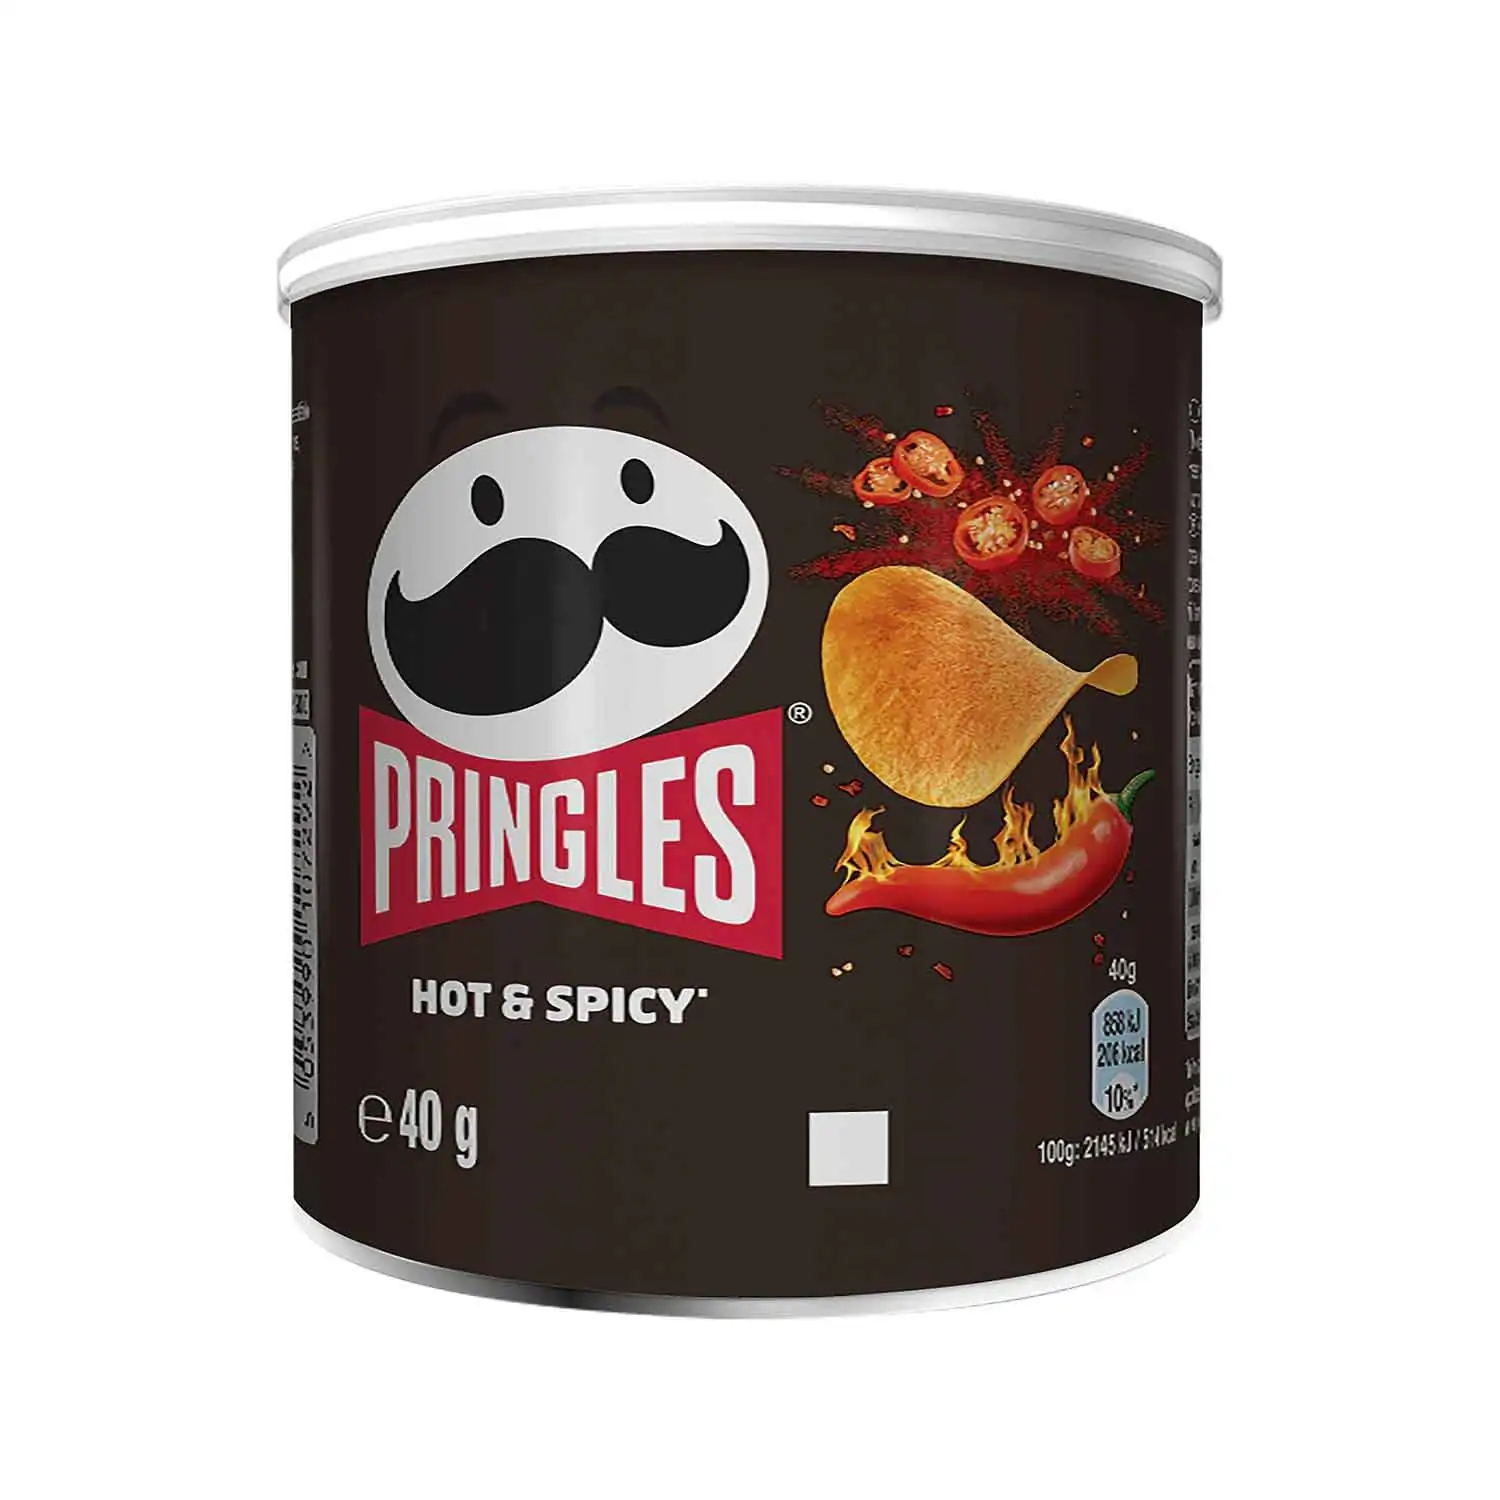 Pringles hot & spicy 40g - Buy at Real Tobacco